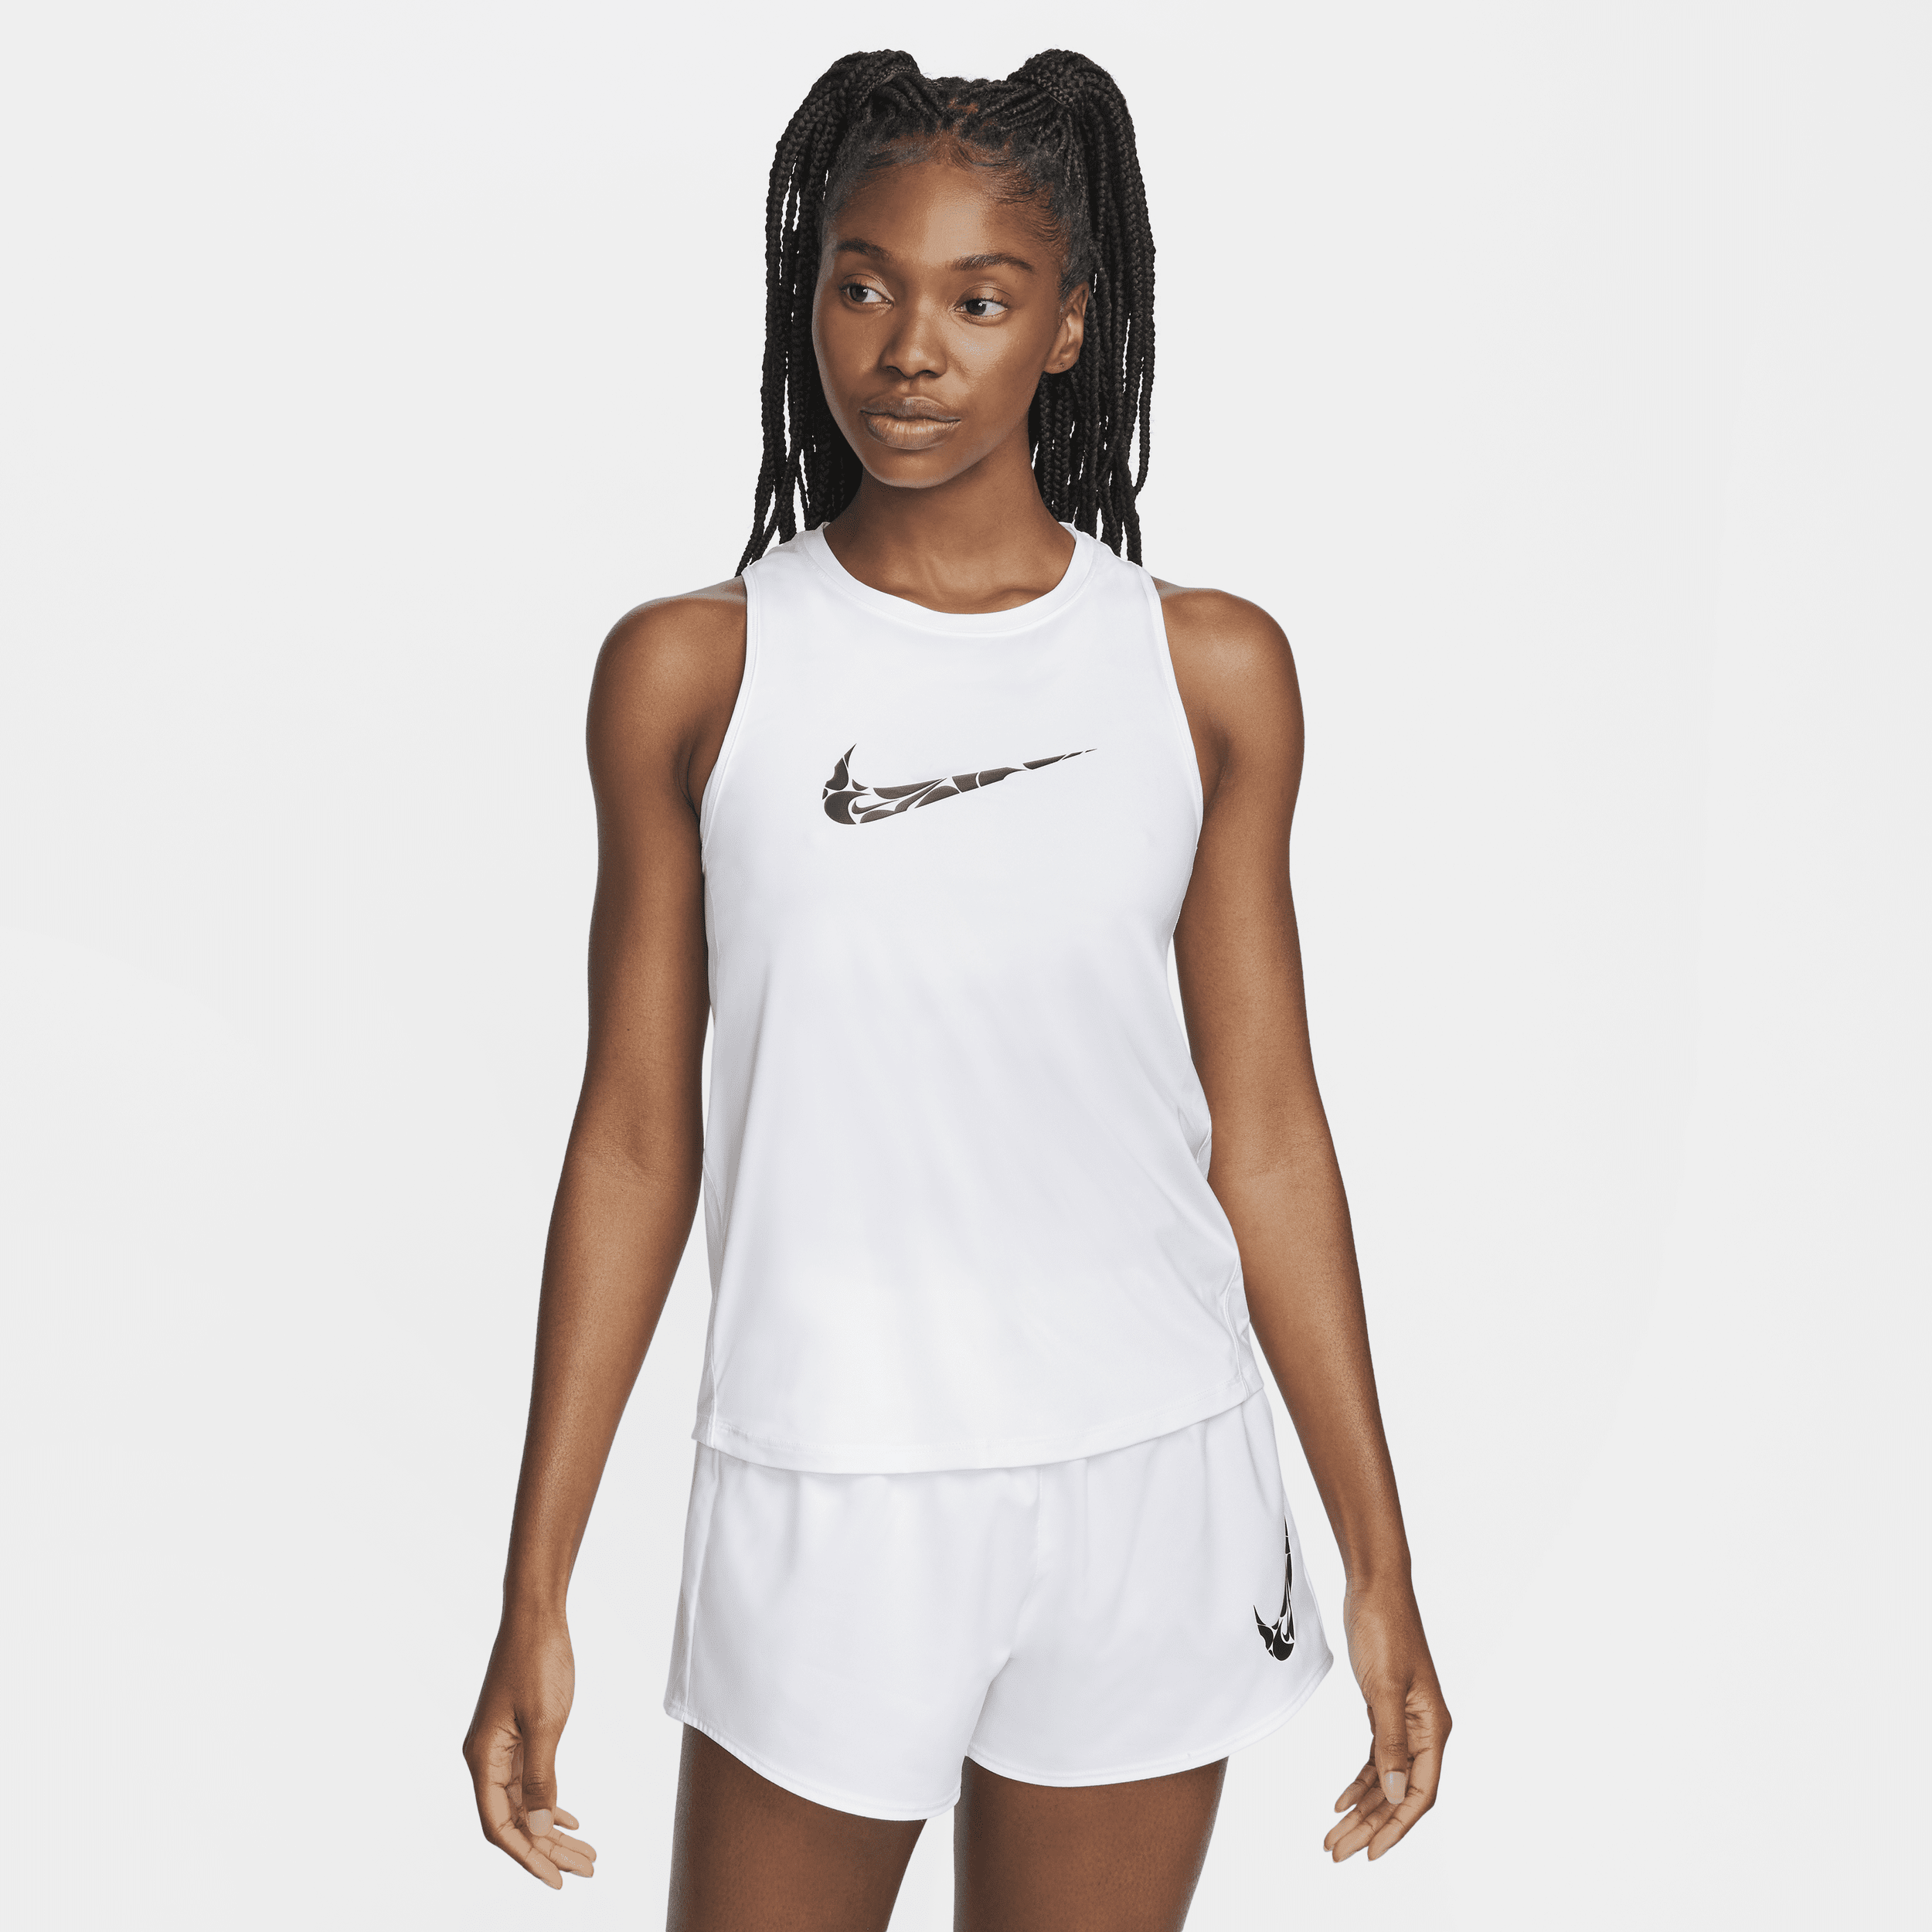 Nike One hardlooptanktop met graphic voor dames Wit